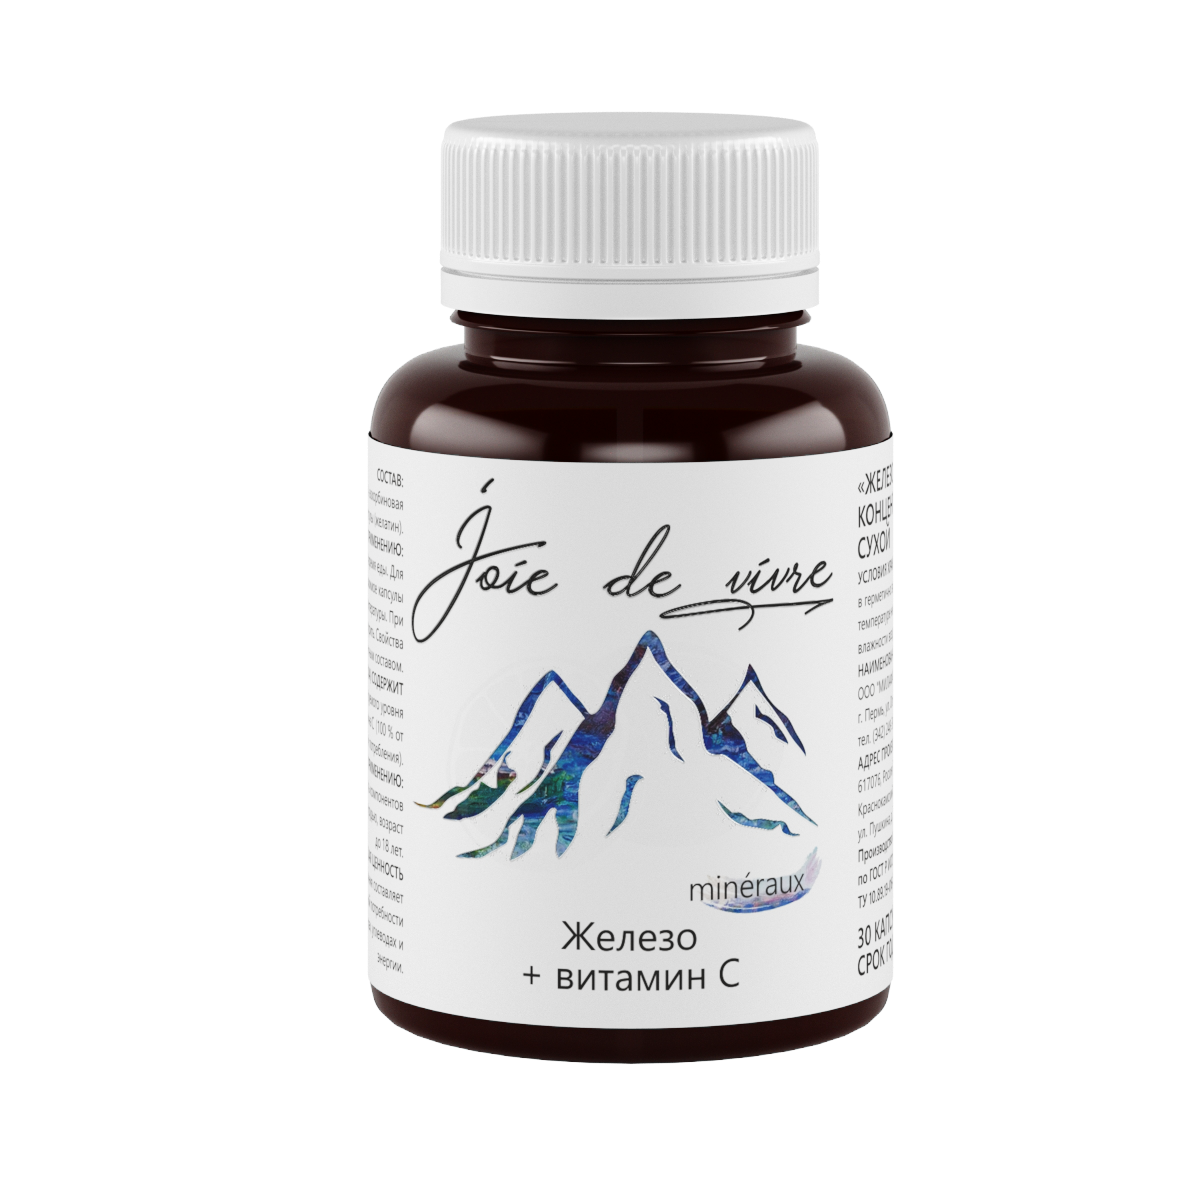 Фумарат железа + витамин С Joie de vivre от анемии капсулы 30 шт.